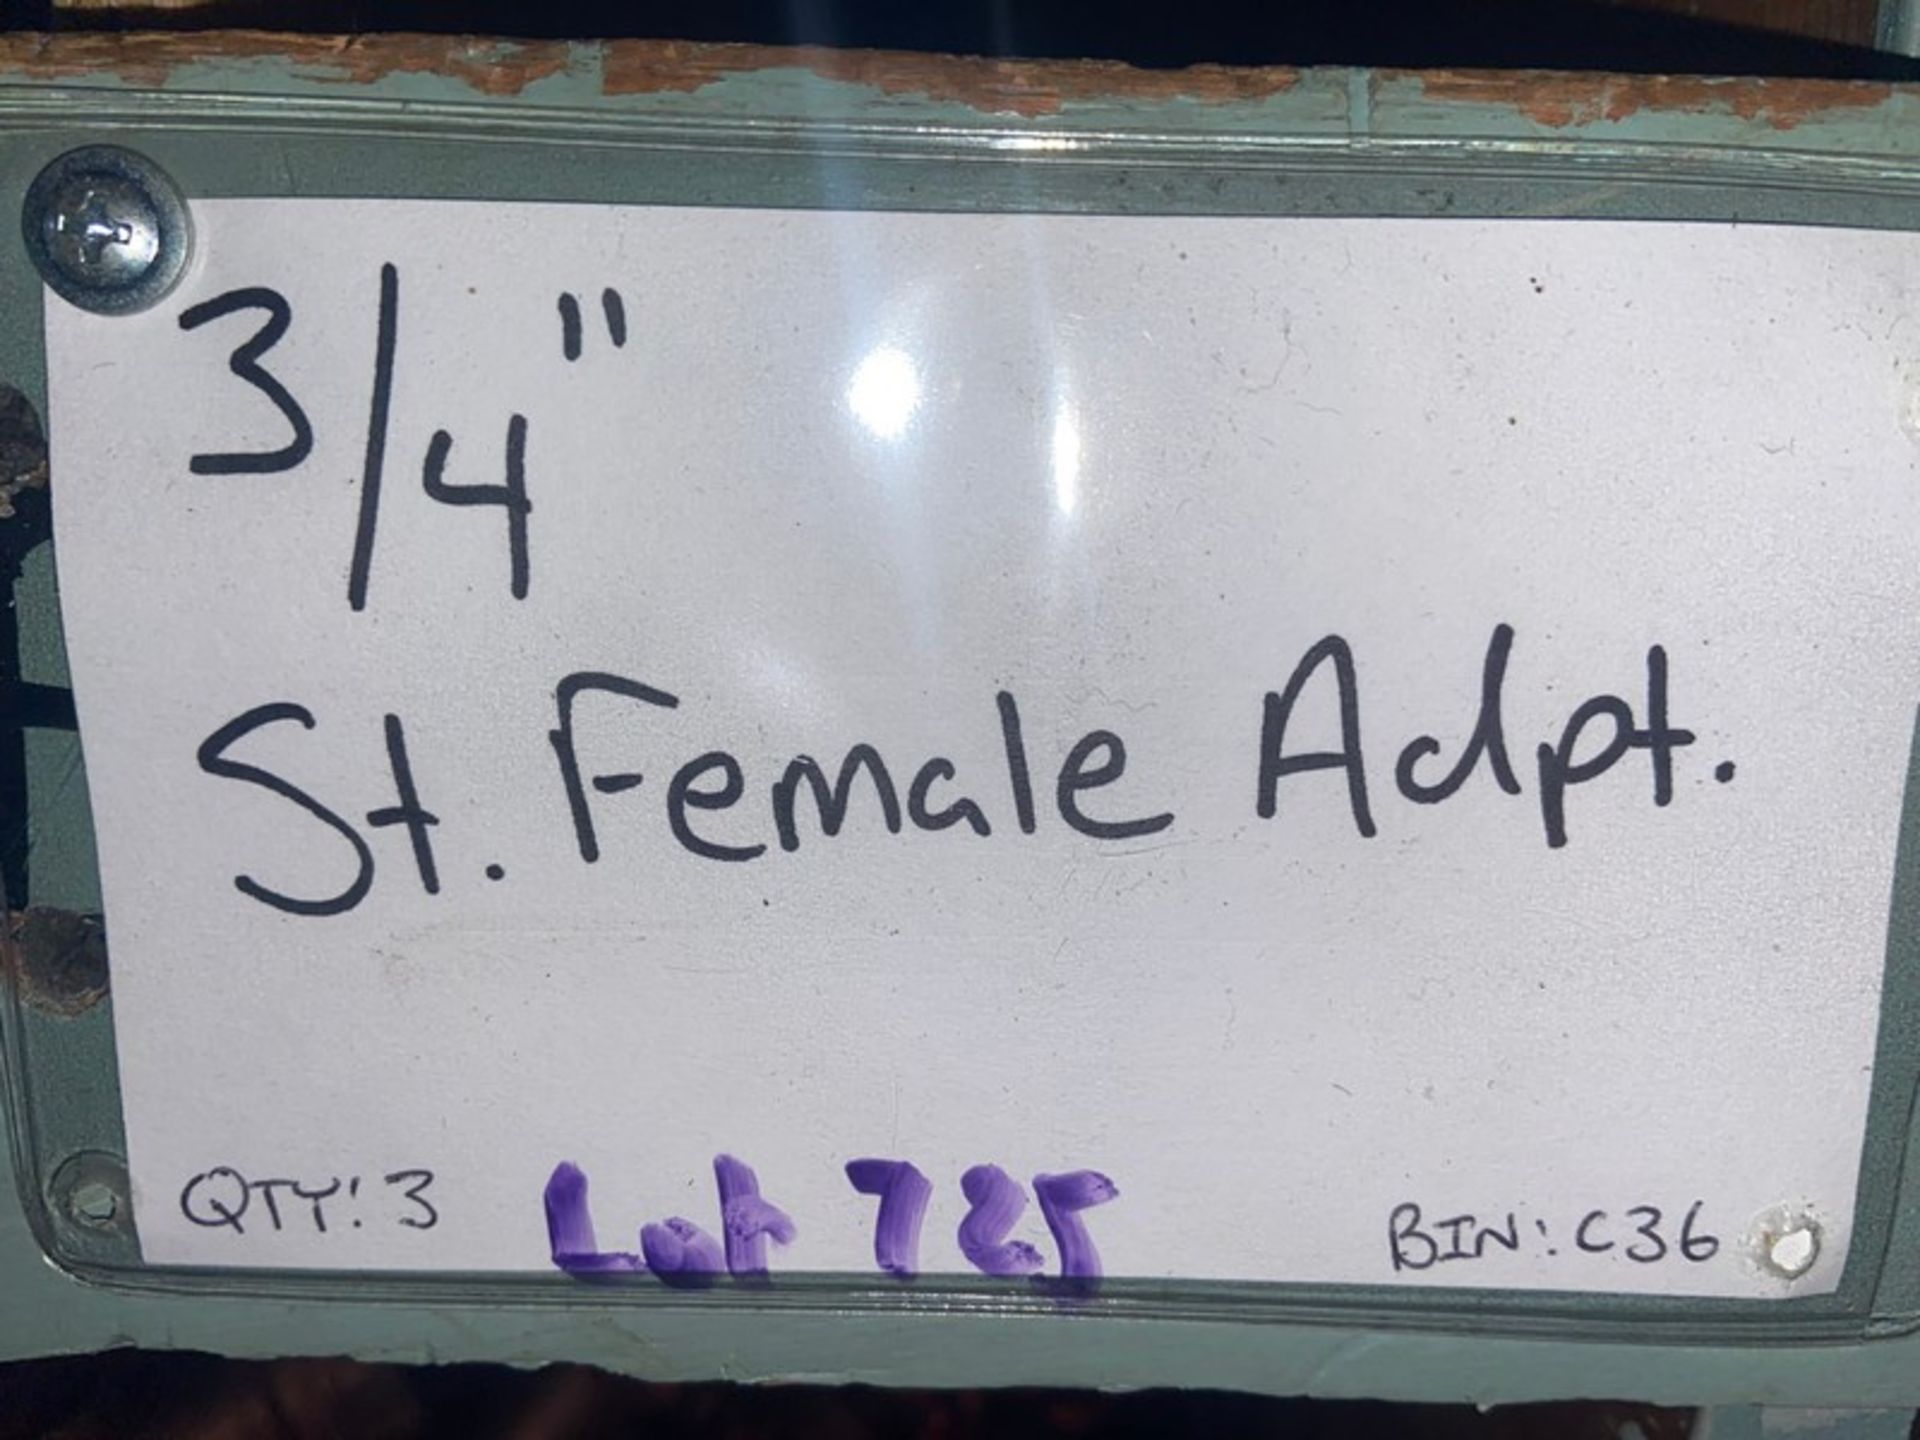 (6) 3/4” Caps (Bin:37); (3) 3/4” St Female Adapt (BinC36); (11) 3/4” Female Adapt (Bin:C35) (LOCATED - Image 5 of 6